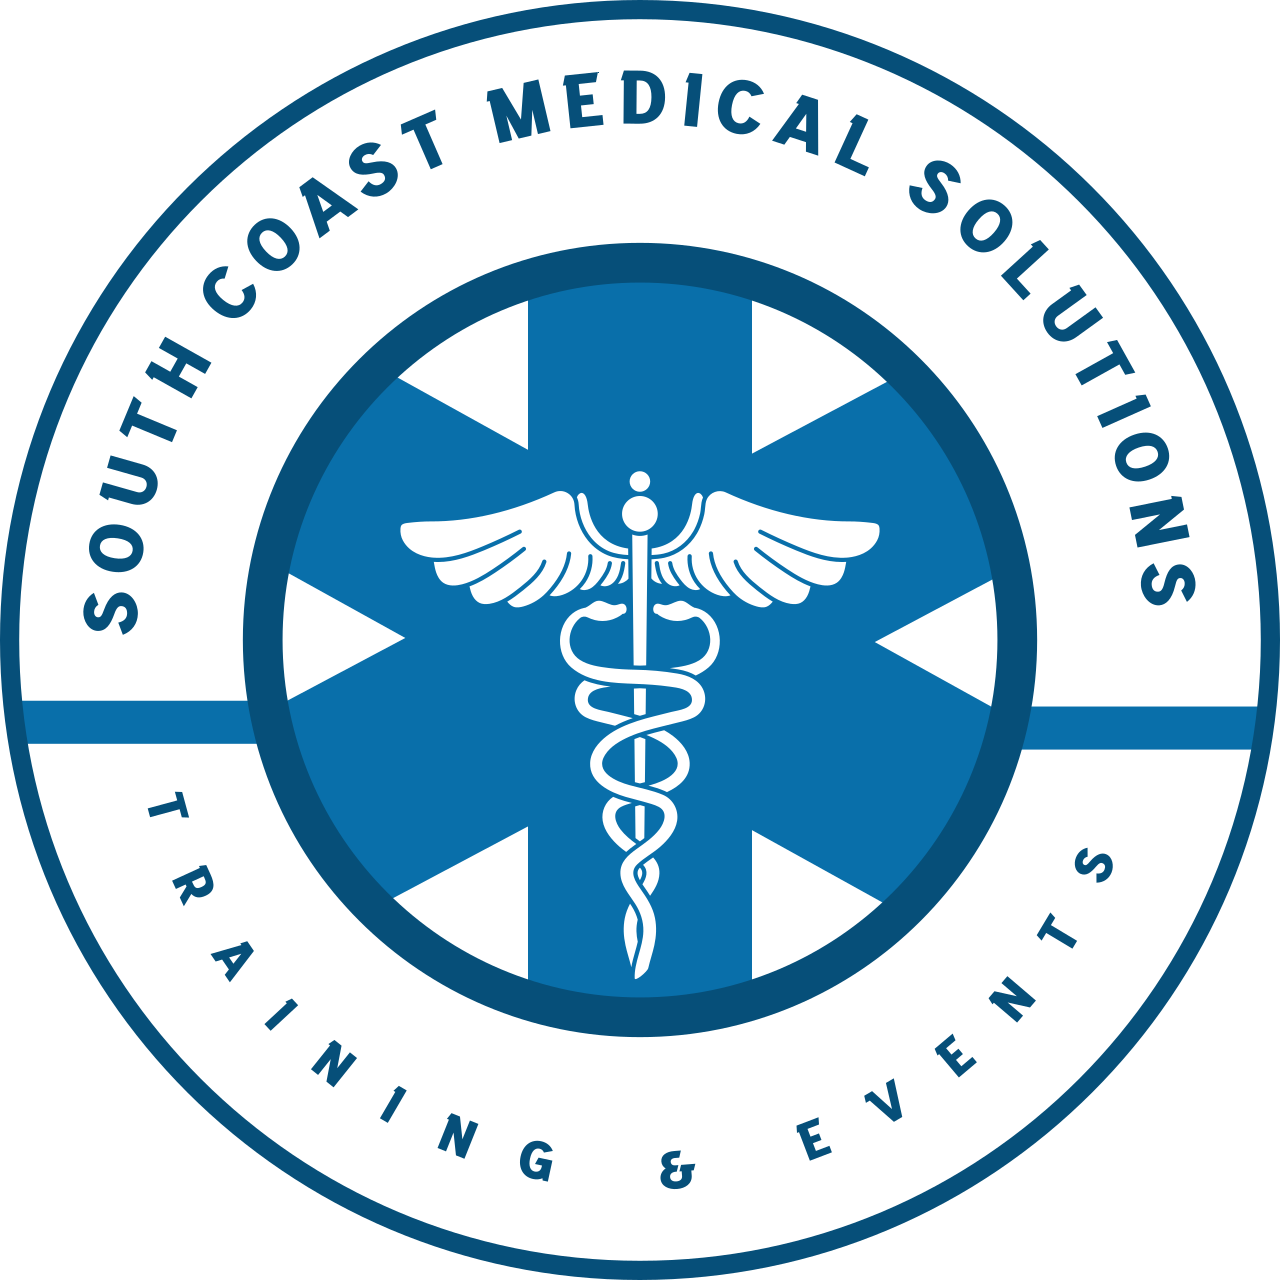 SOUTH COAST FIRST AID 's logo